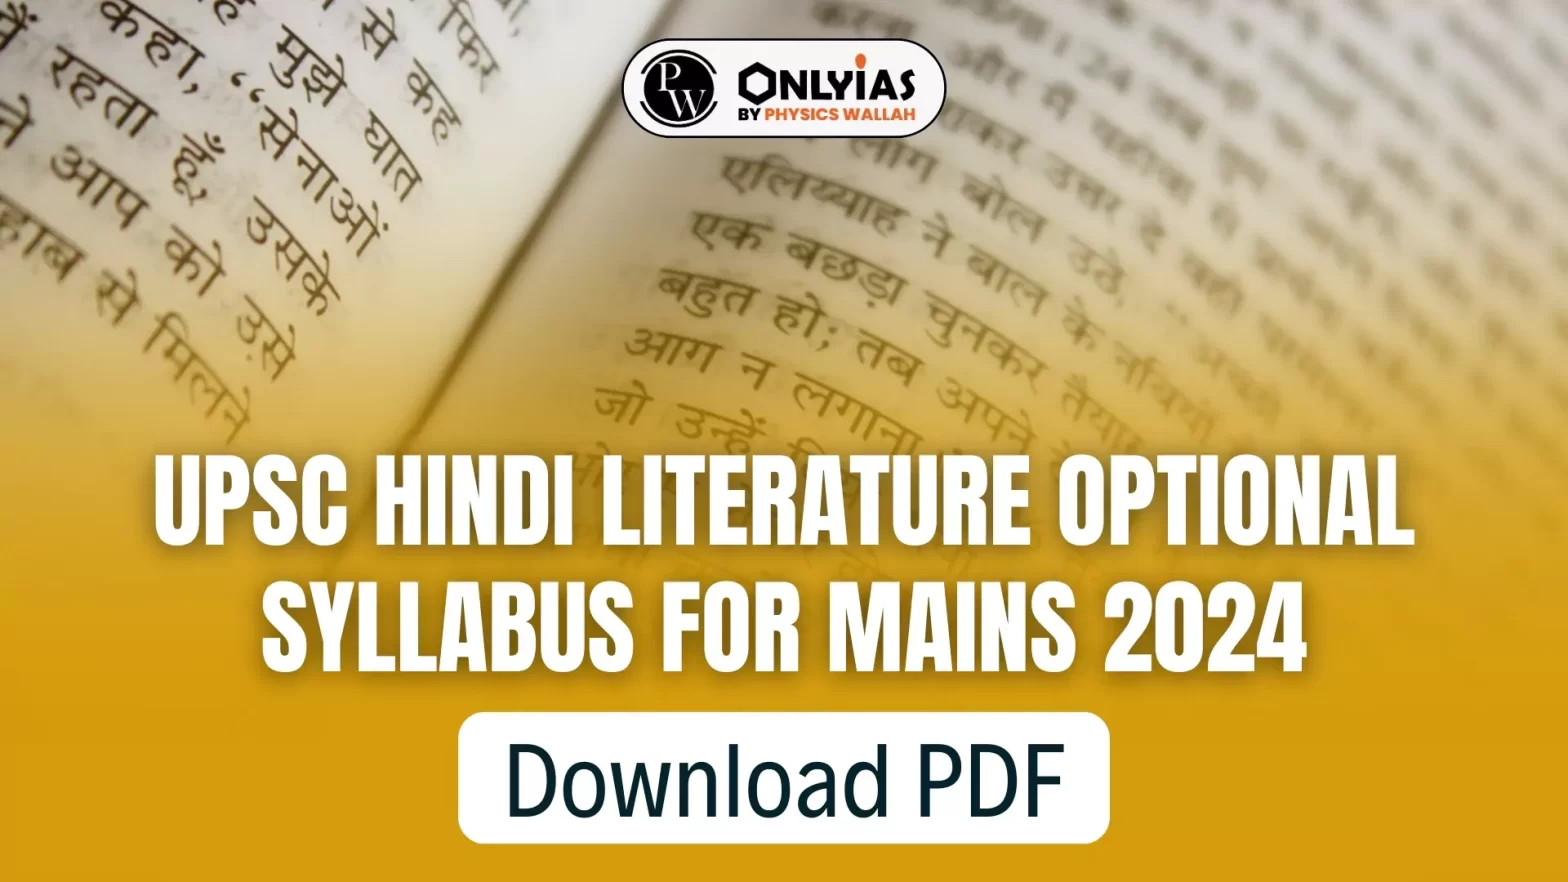 UPSC Hindi Literature Optional Syllabus For Mains 2024, Download PDF